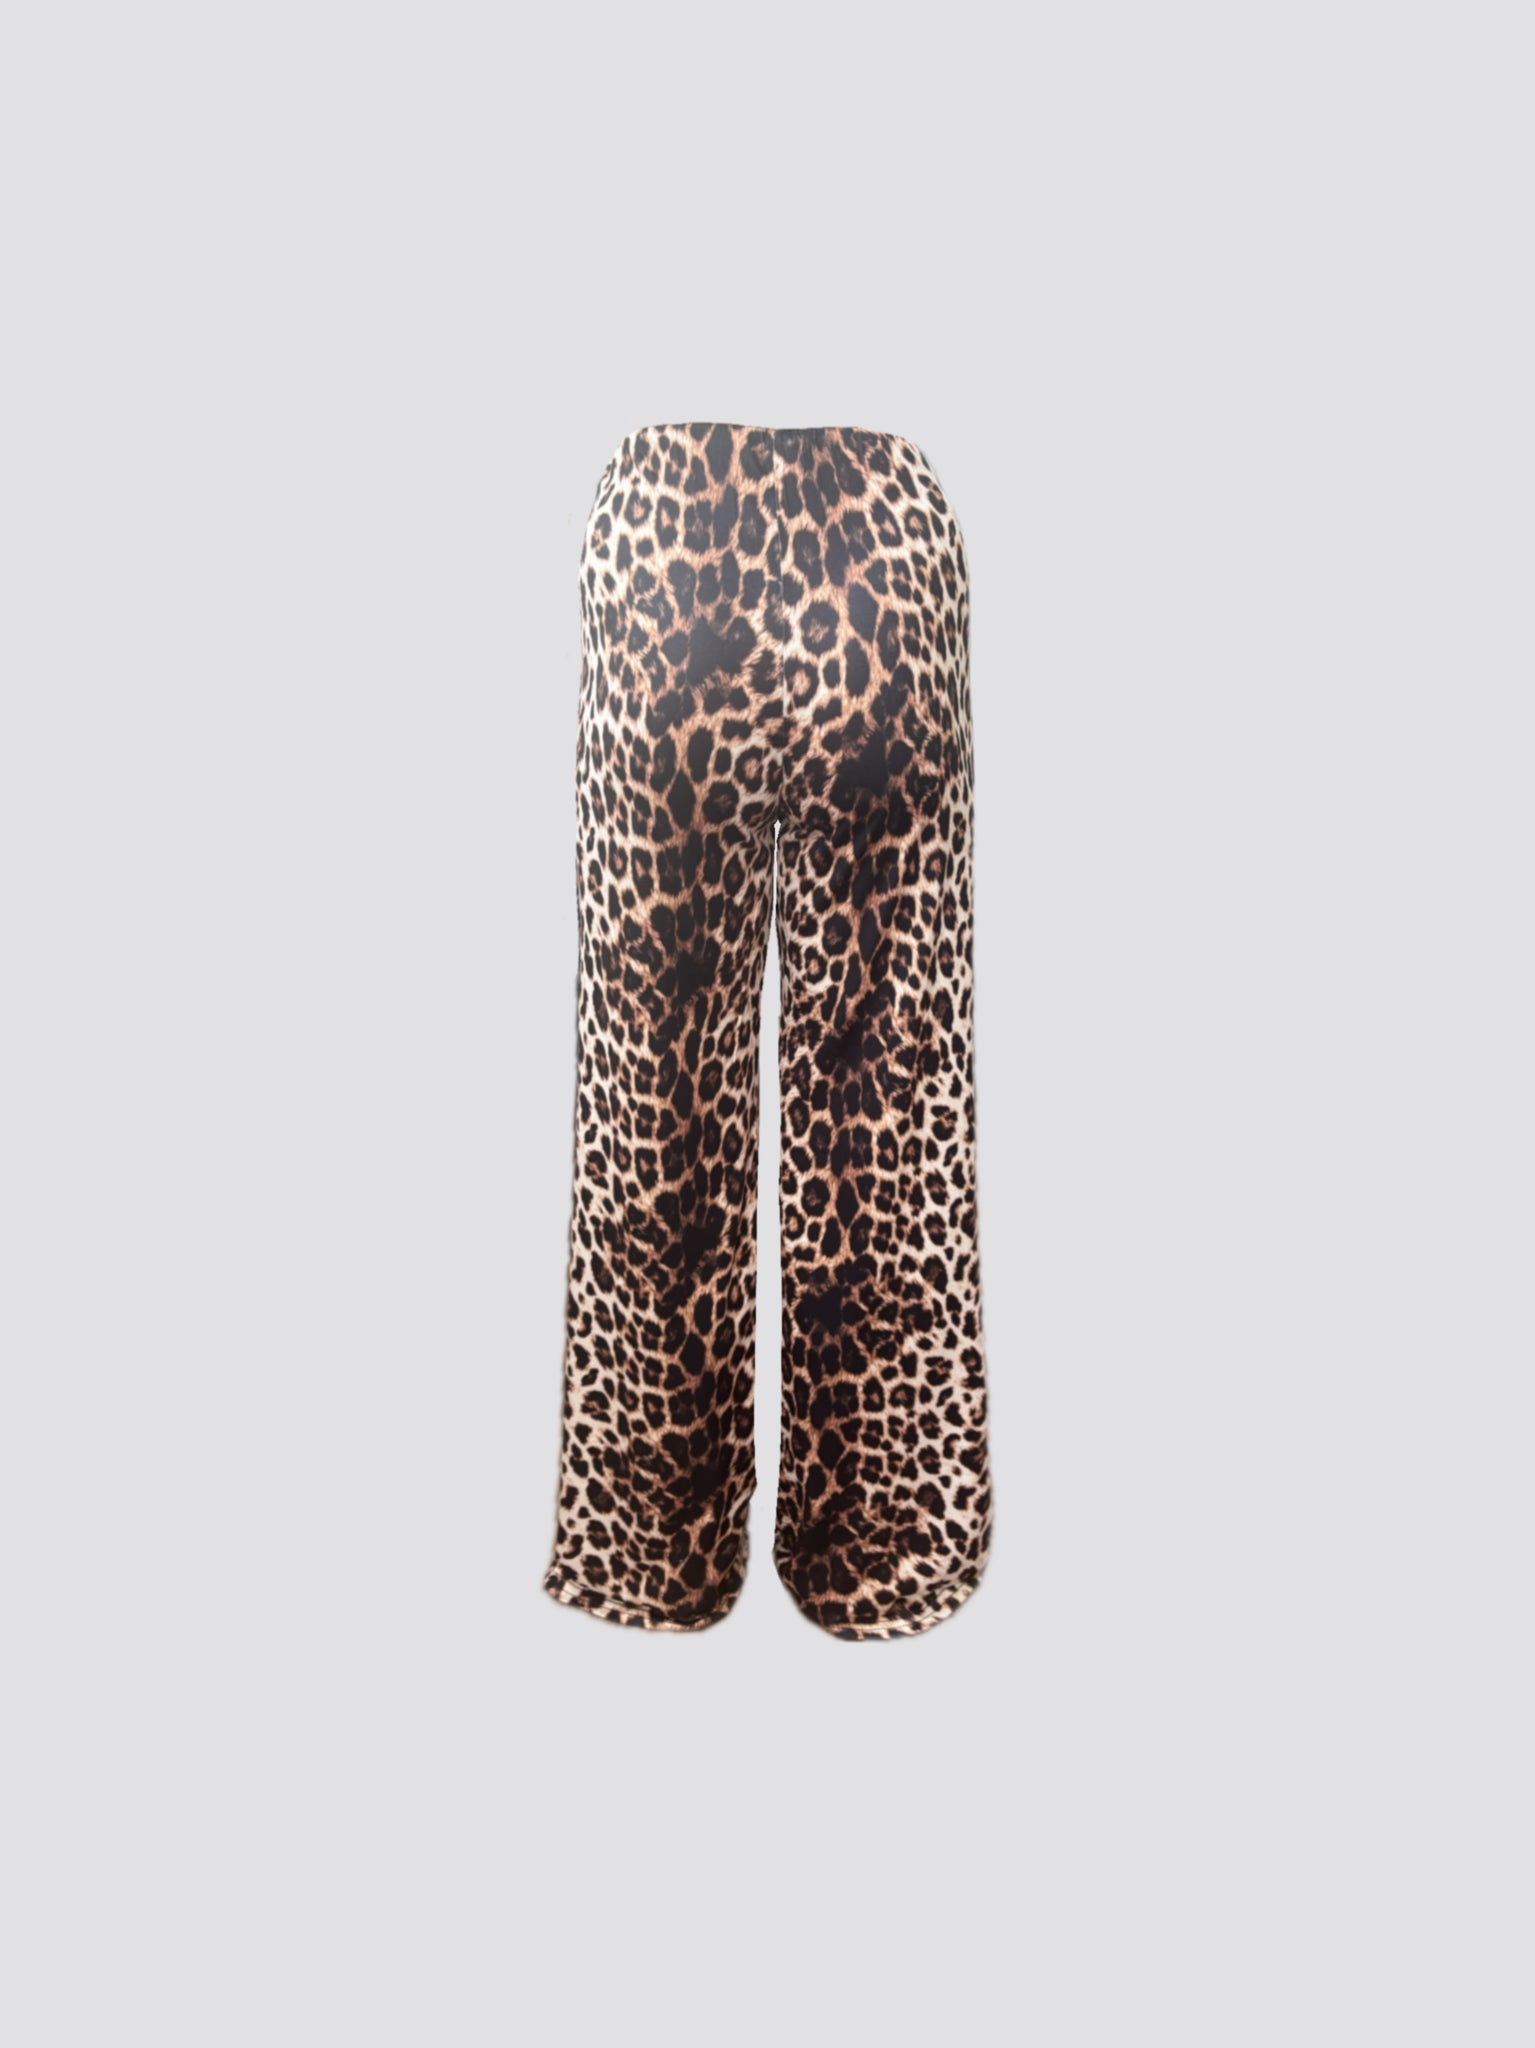 Leopard print wide leg trouser in supersoft